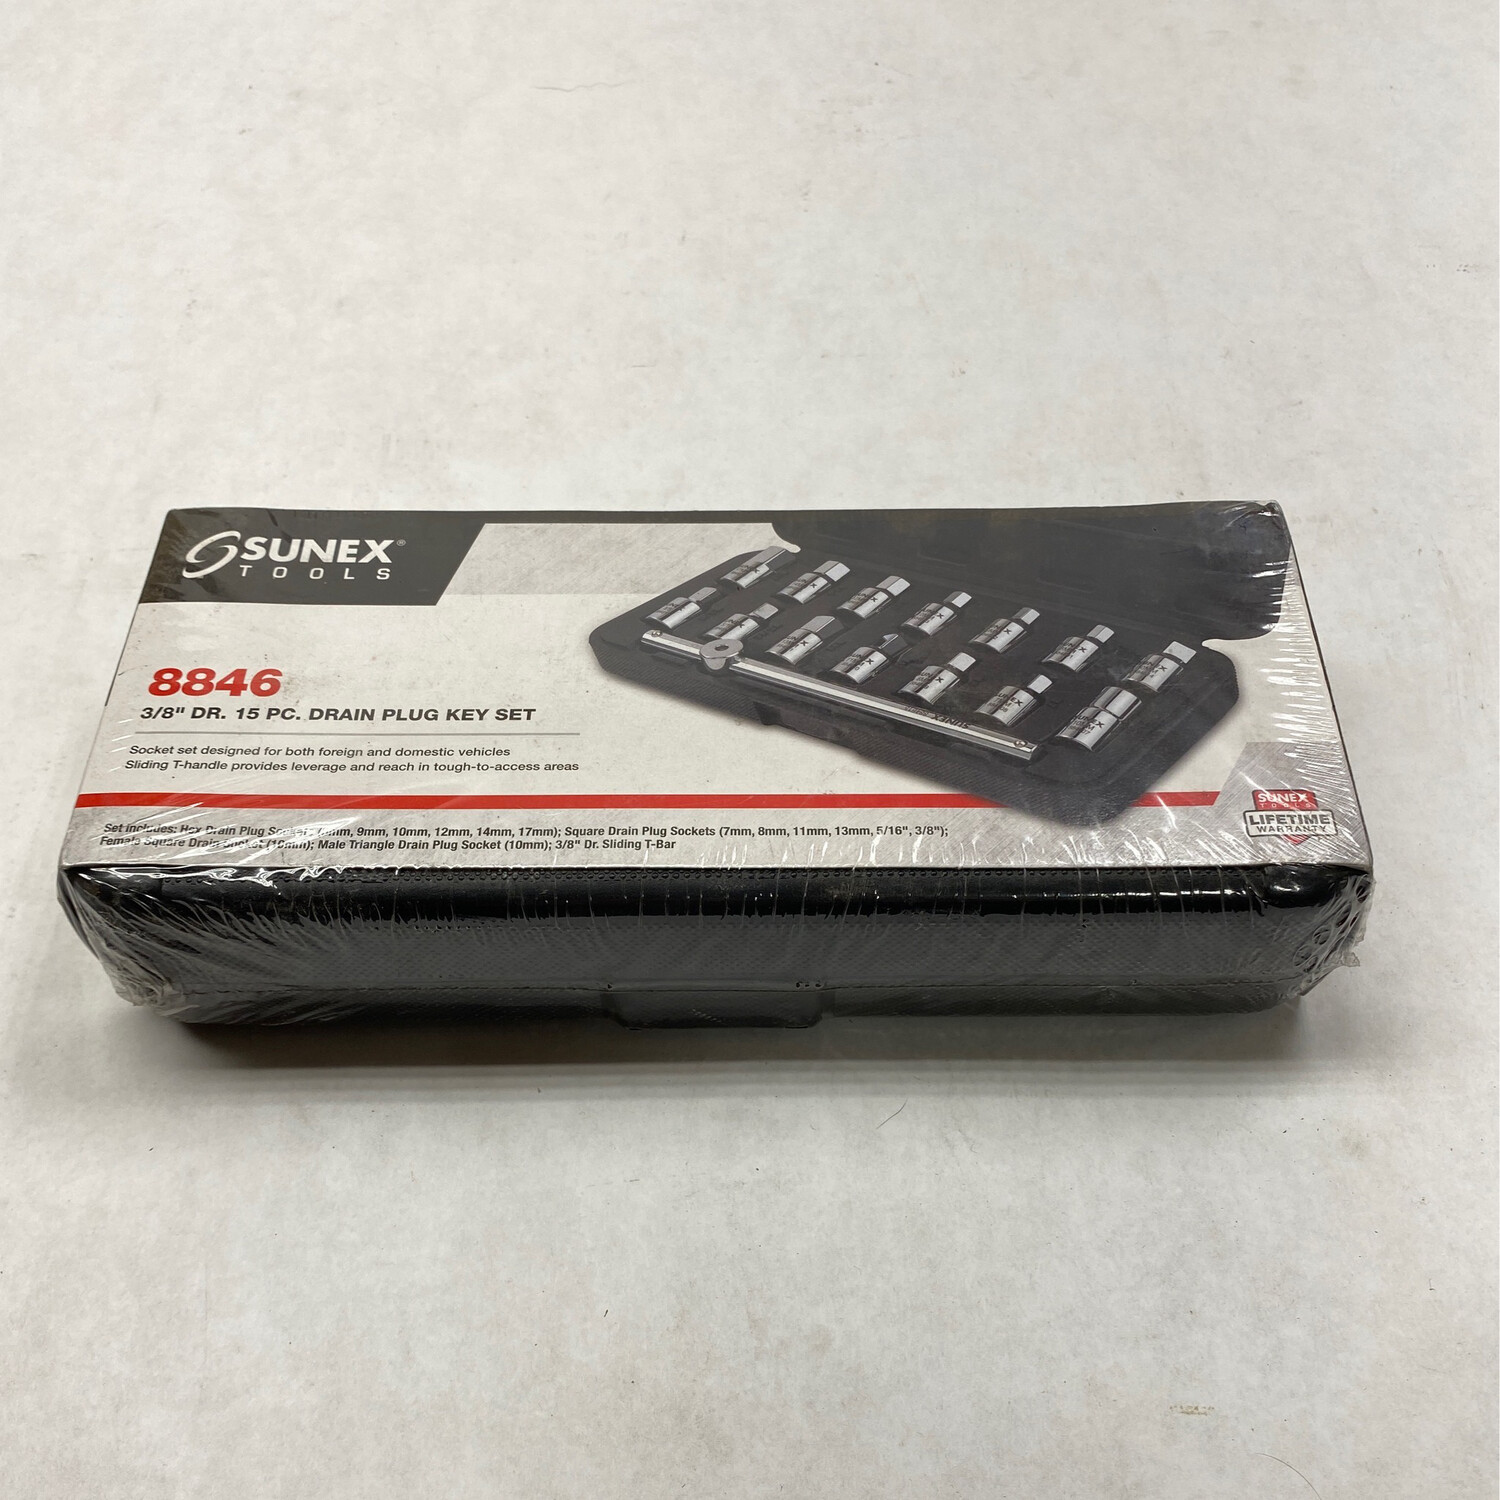 Sunex Tools 15pc. 3/8” Drive Drain Plug Key Set, 8846